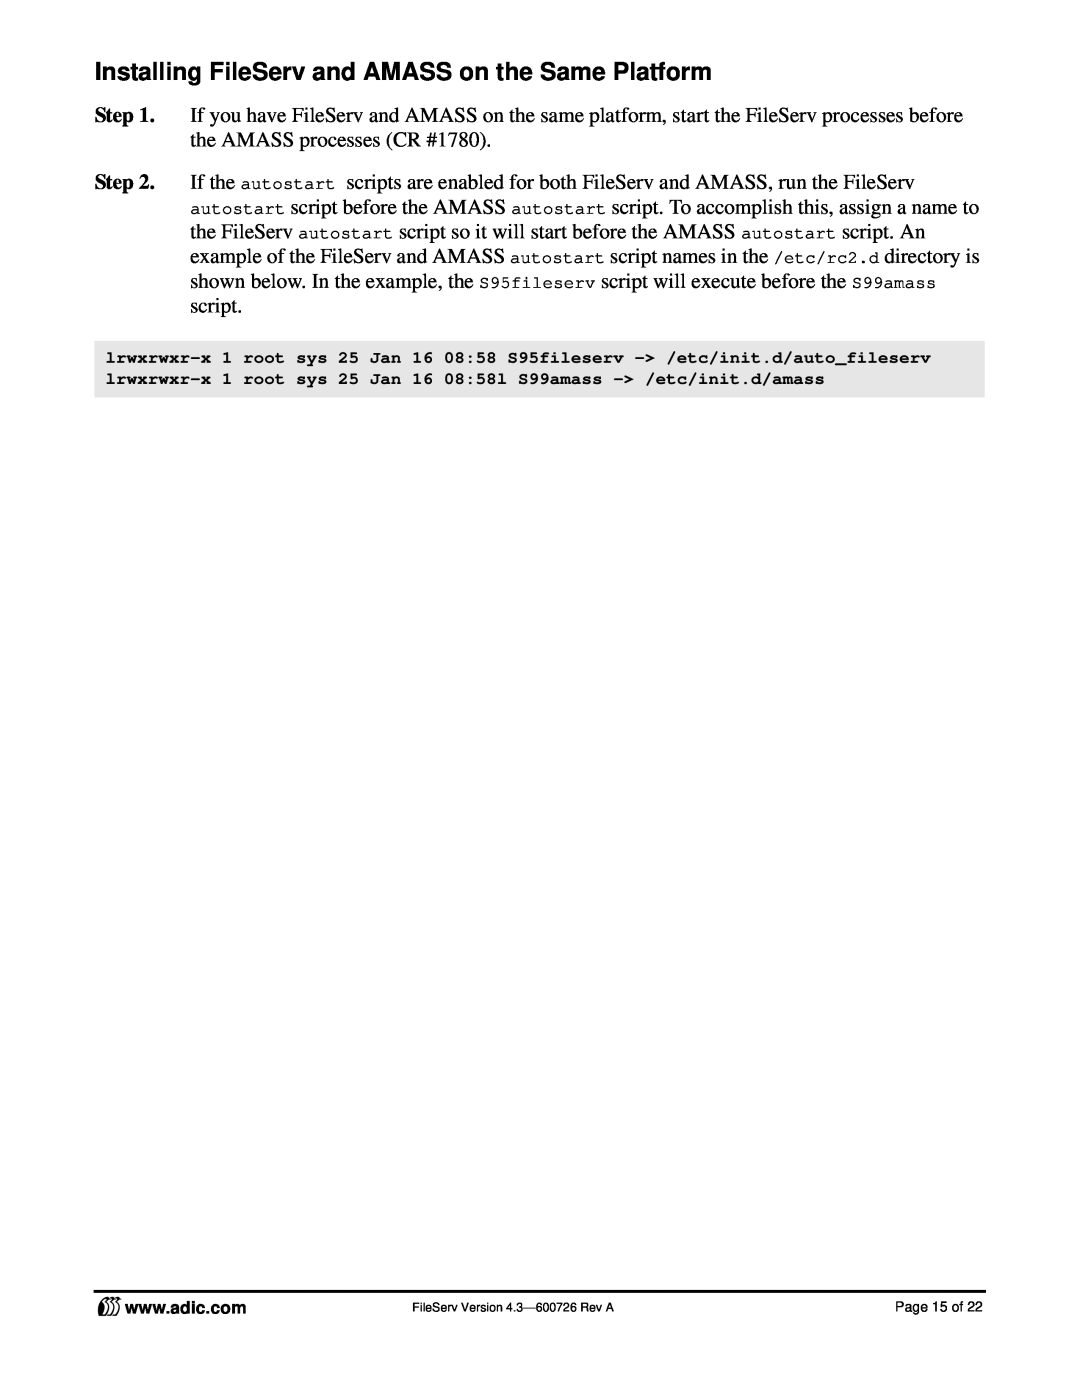 ADIC manual FileServ Version 4.3-600726Rev A, Page 15 of 